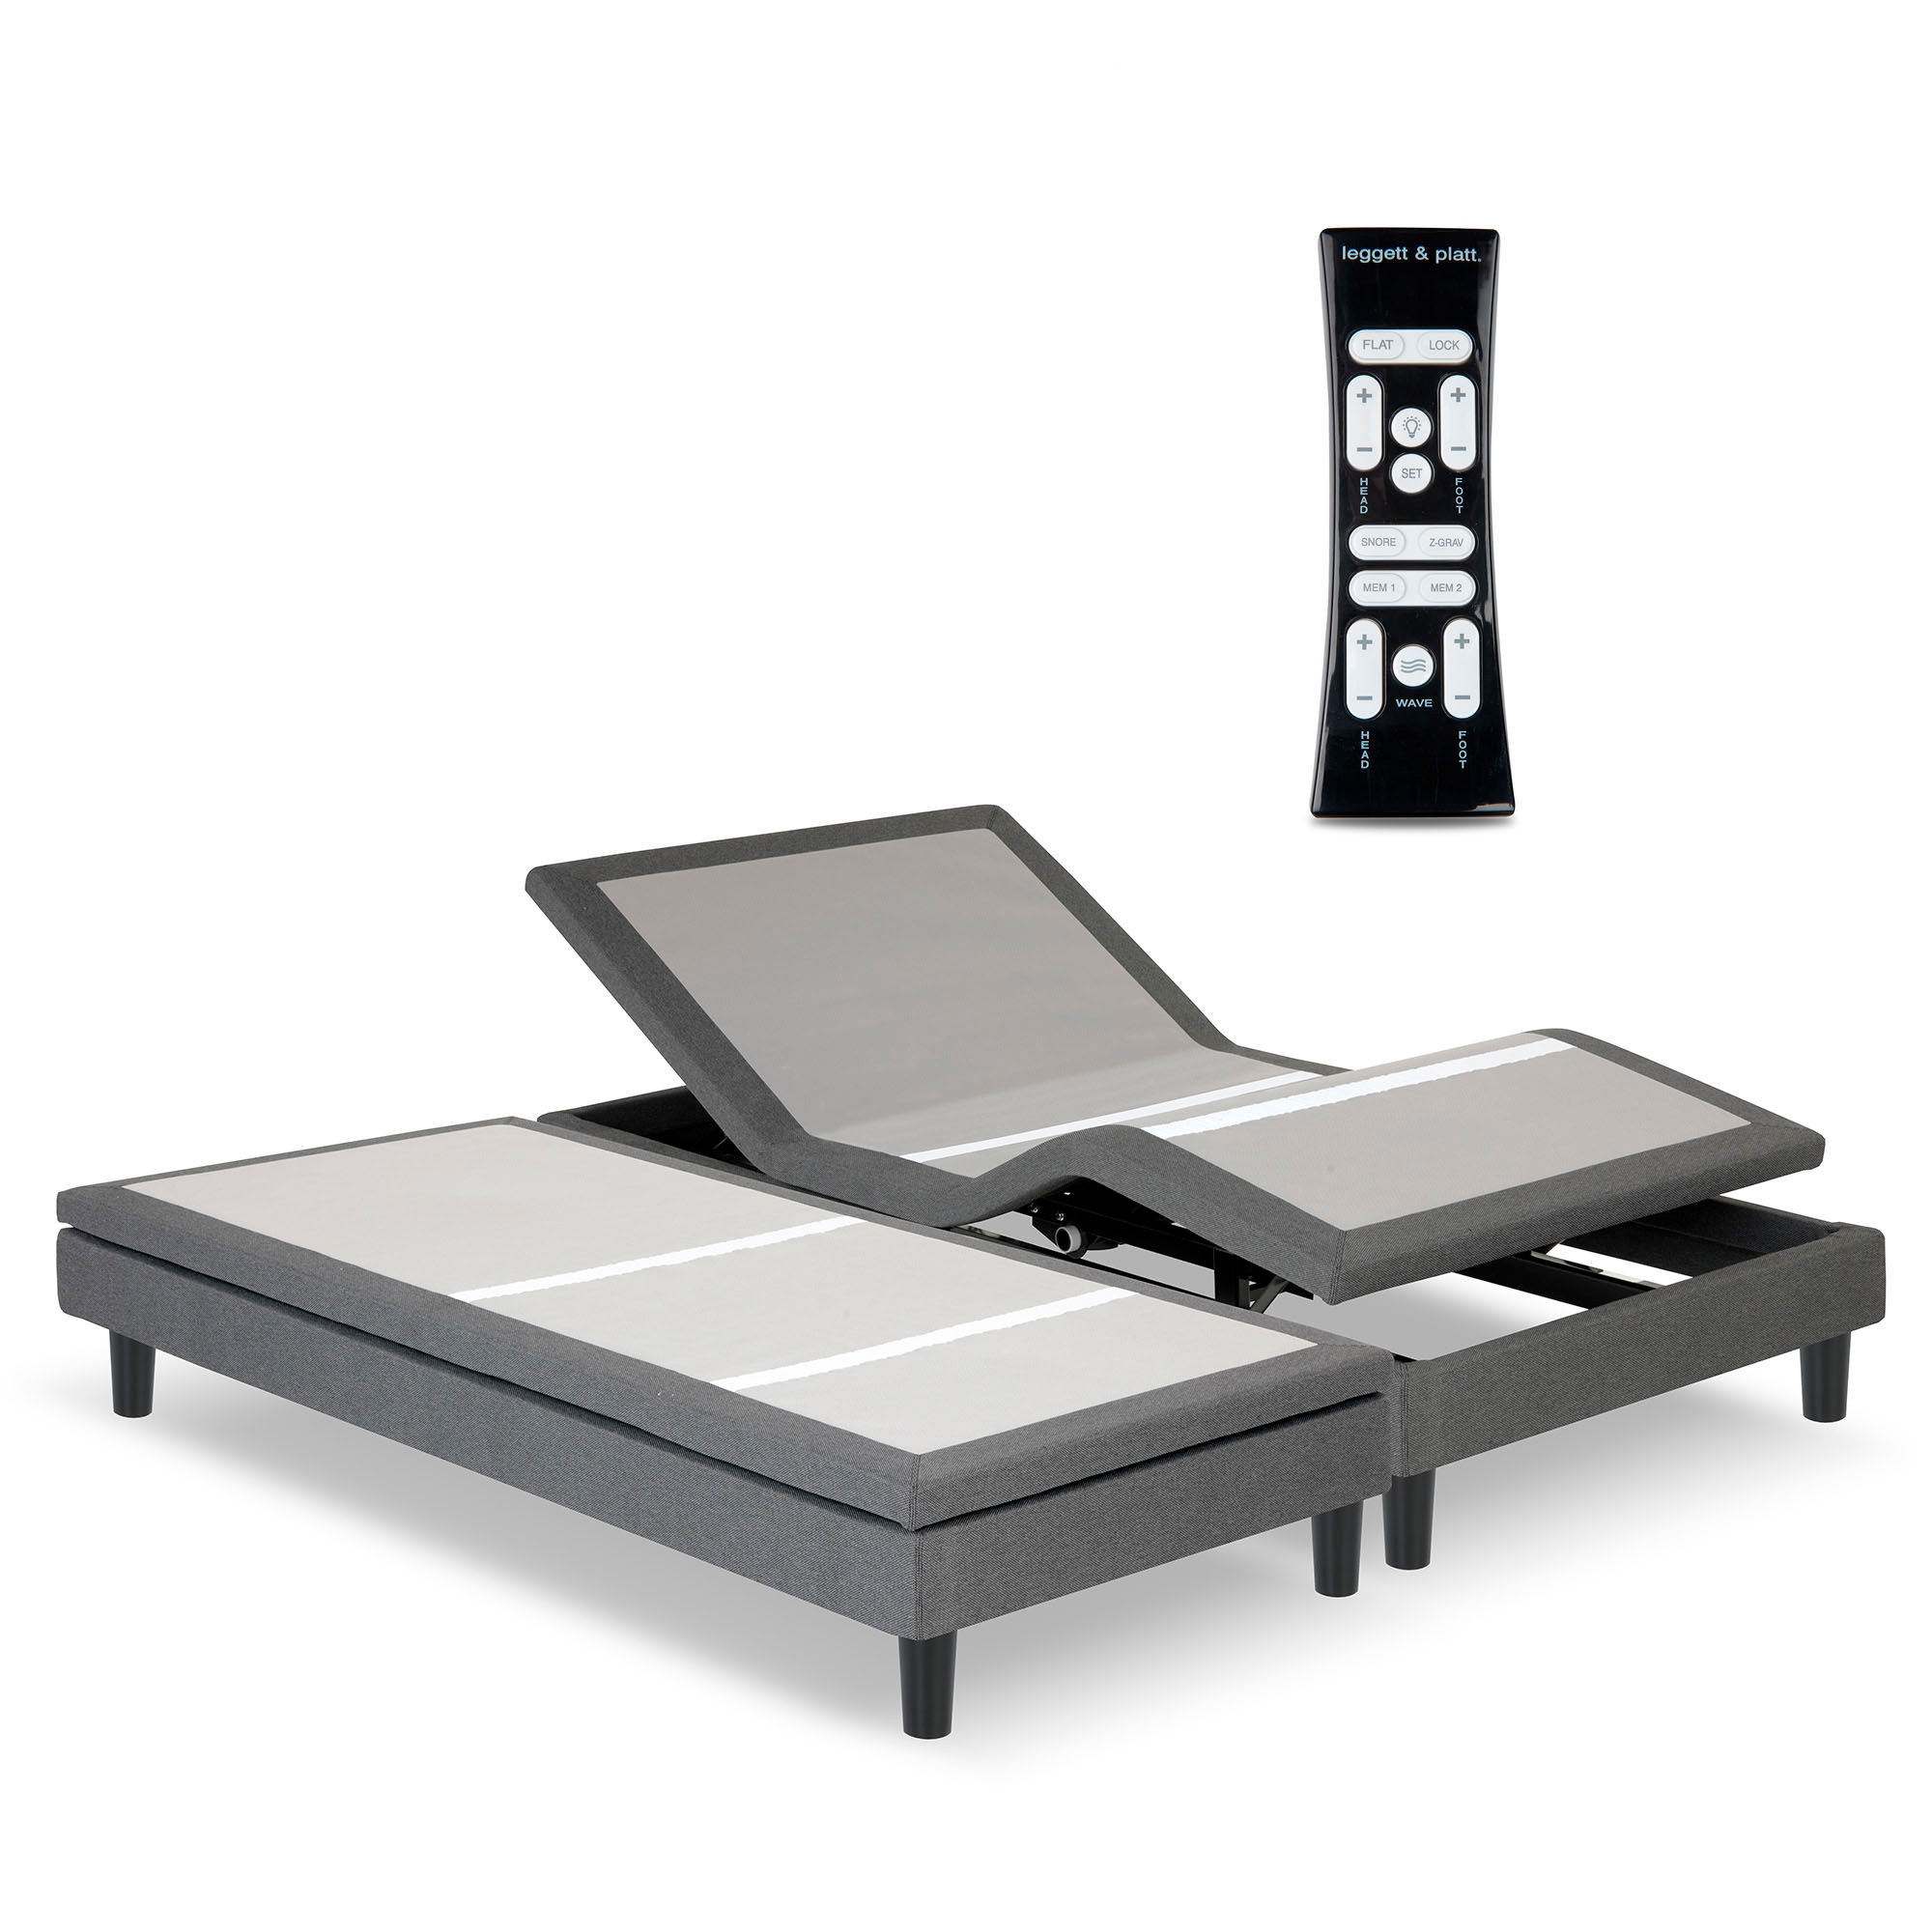 Leggett & Platt Mattresses S-Cape 2.0 Adjustable Furniture-Style 